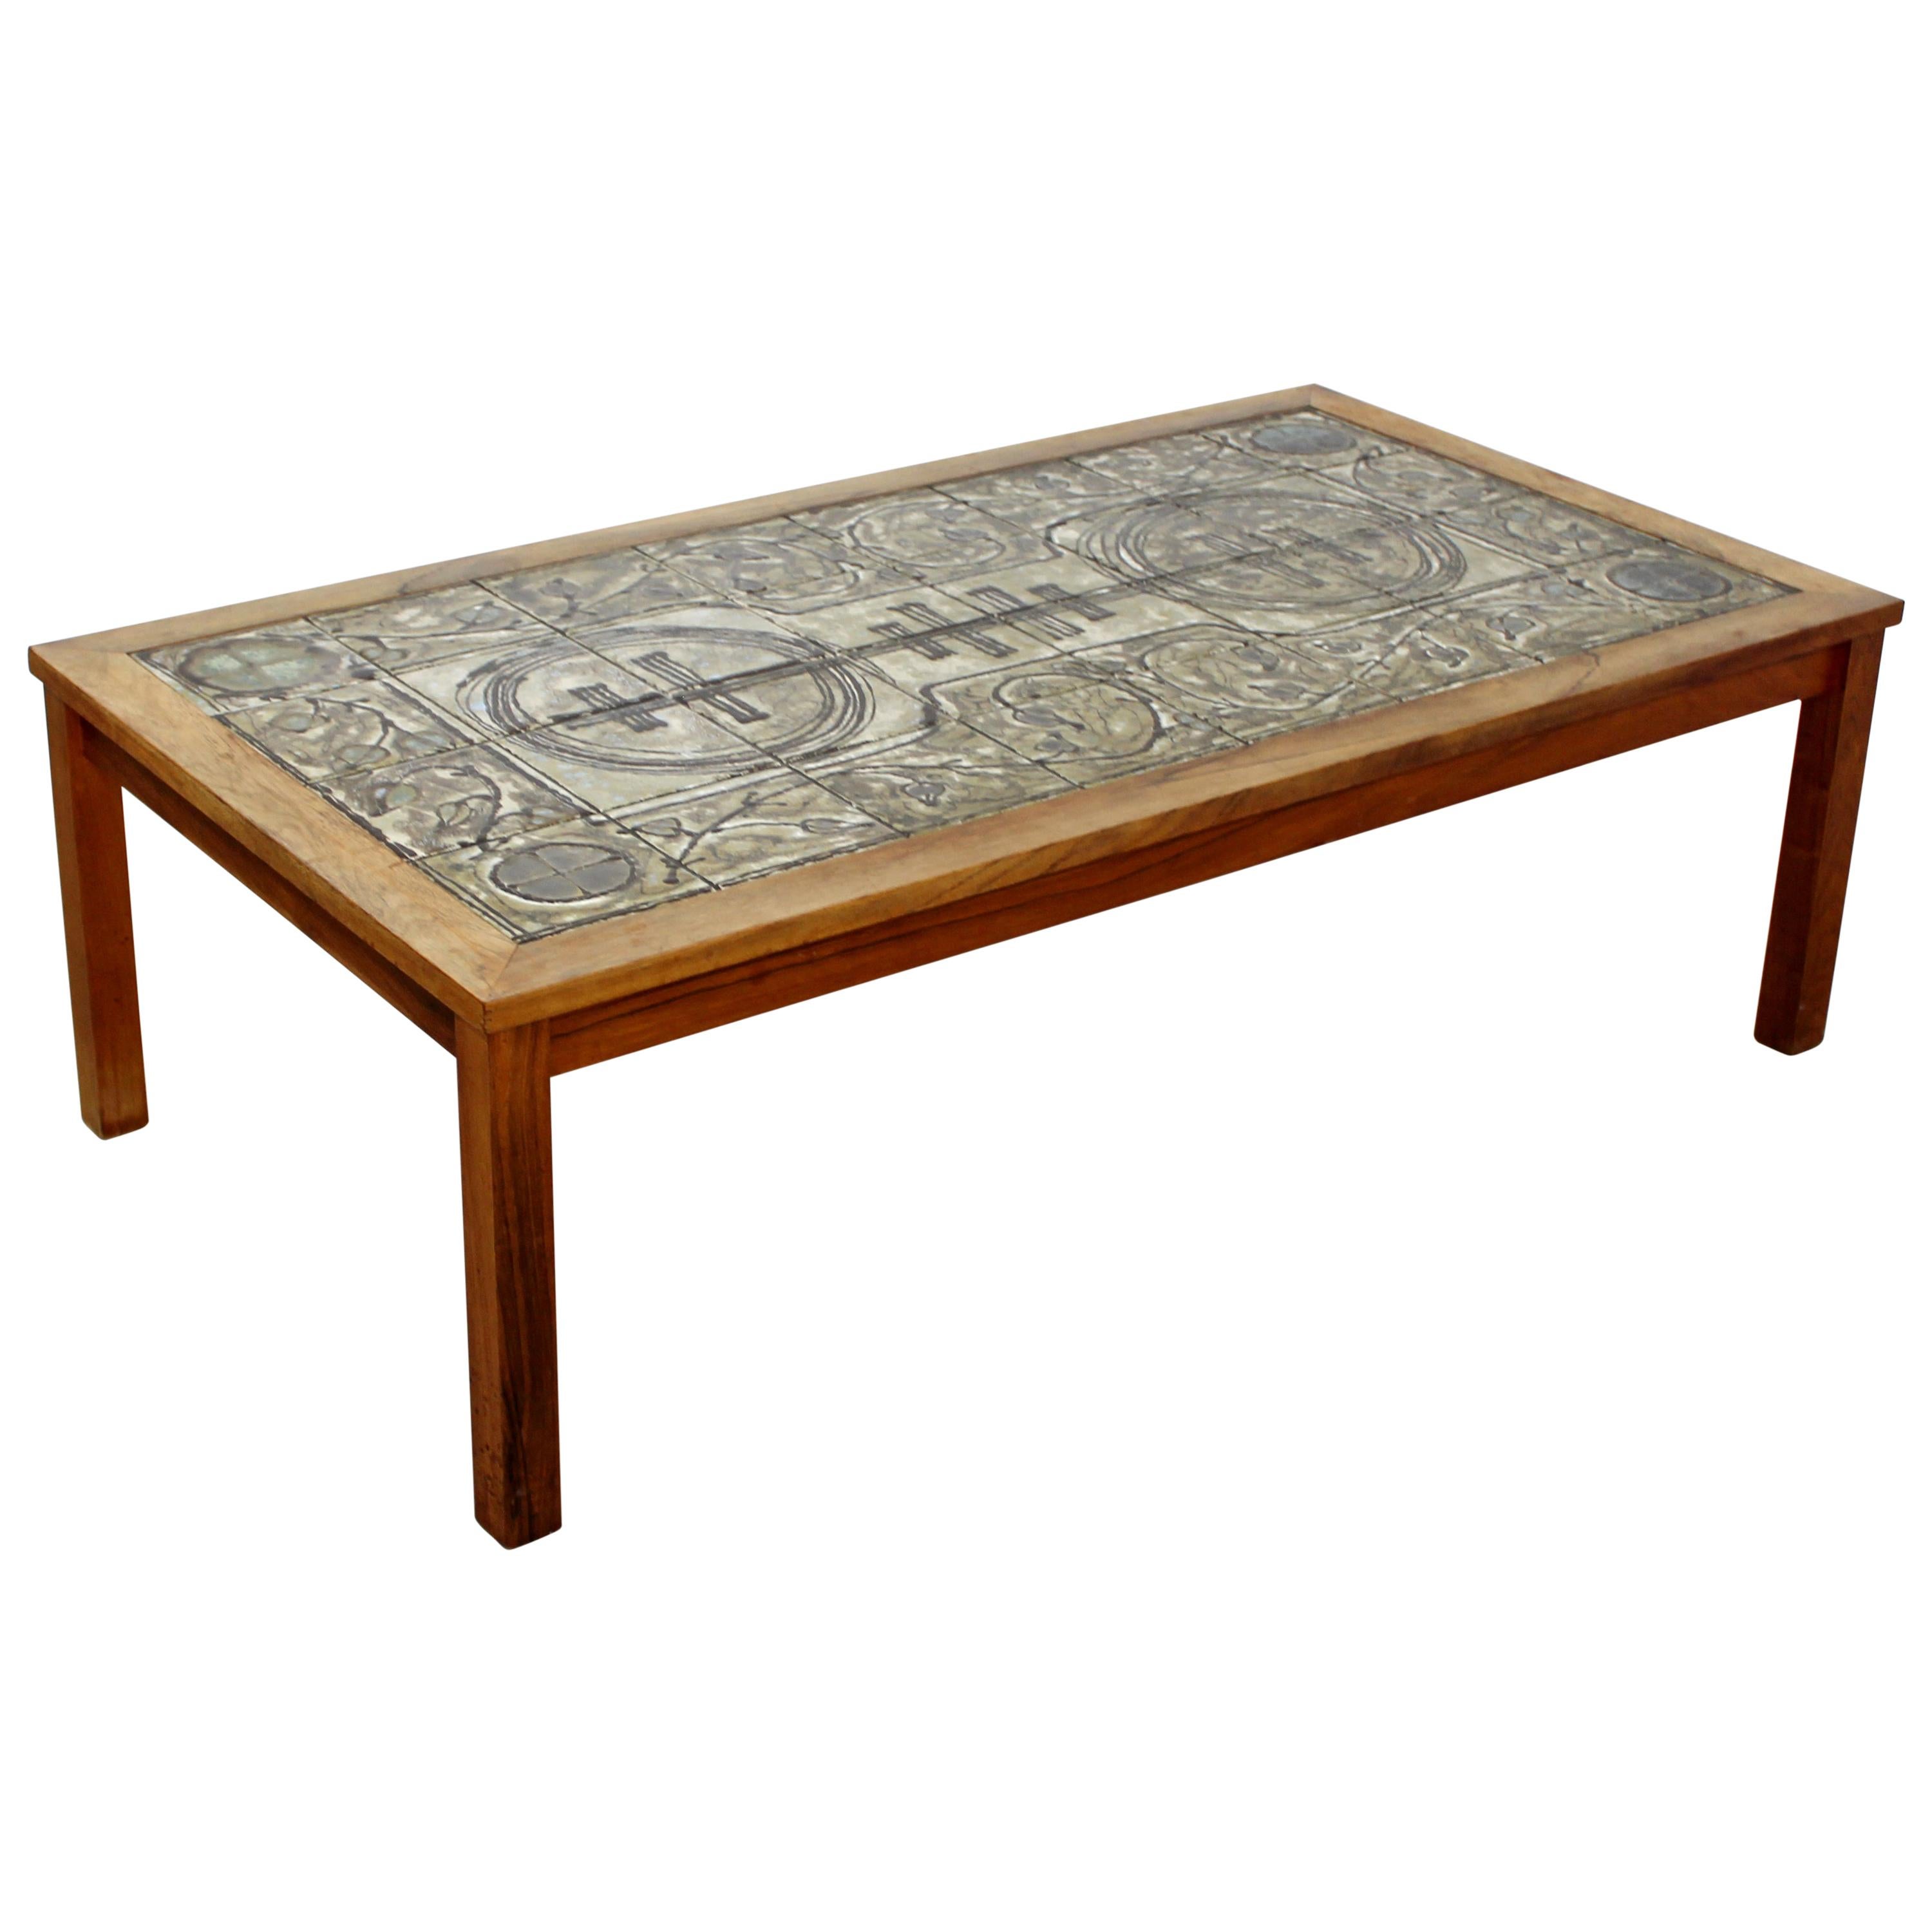 Mid-Century Modern Rectangular Tile Topped Wood Coffee Table, 1960s, Denmark